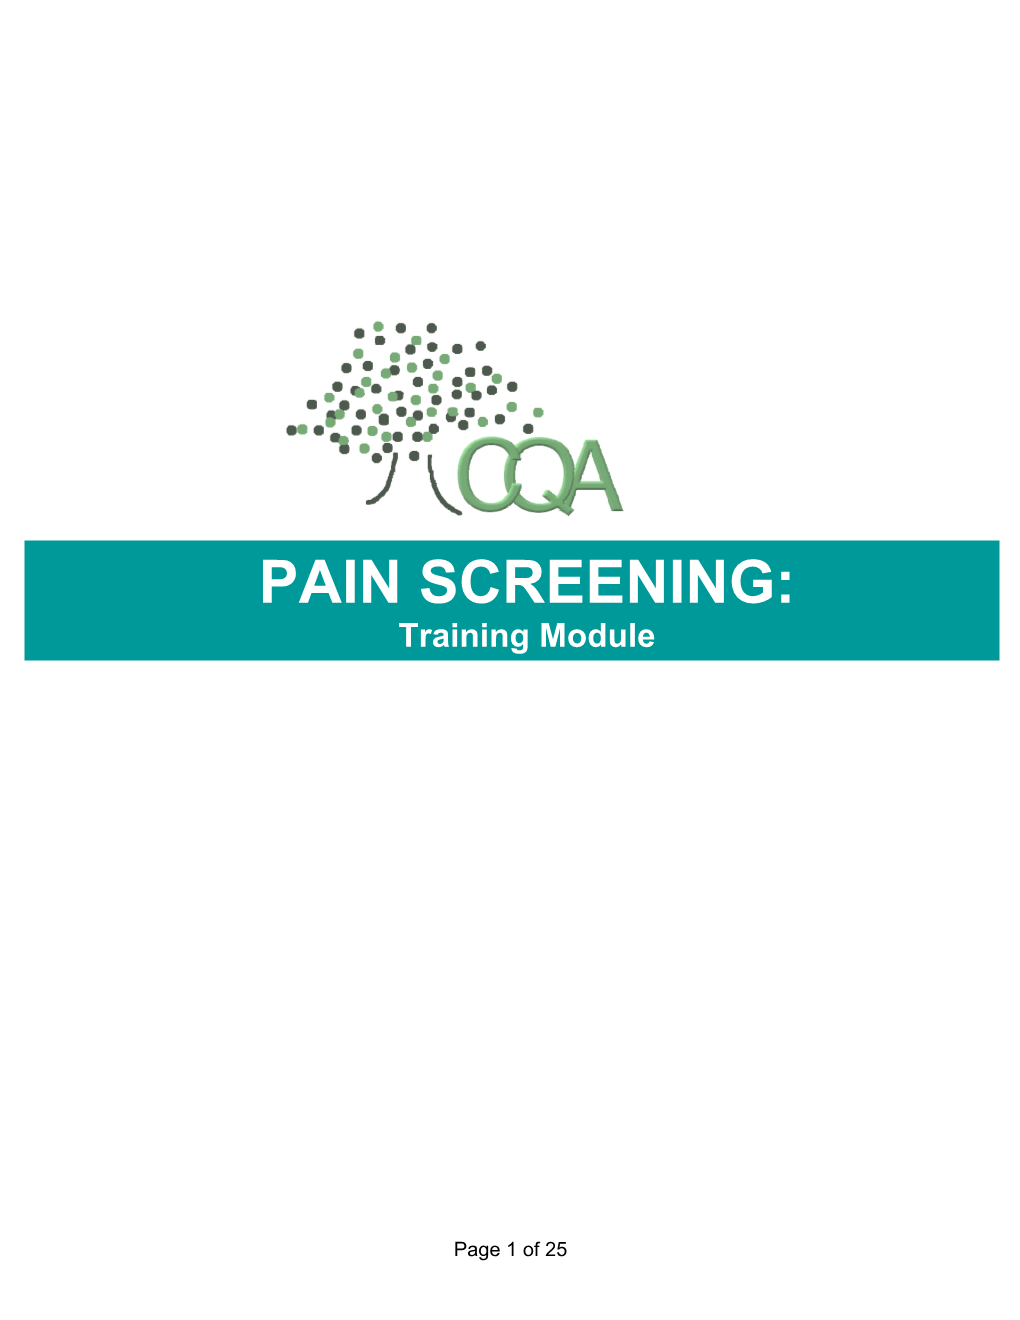 PAIN SCREENING: Training Module